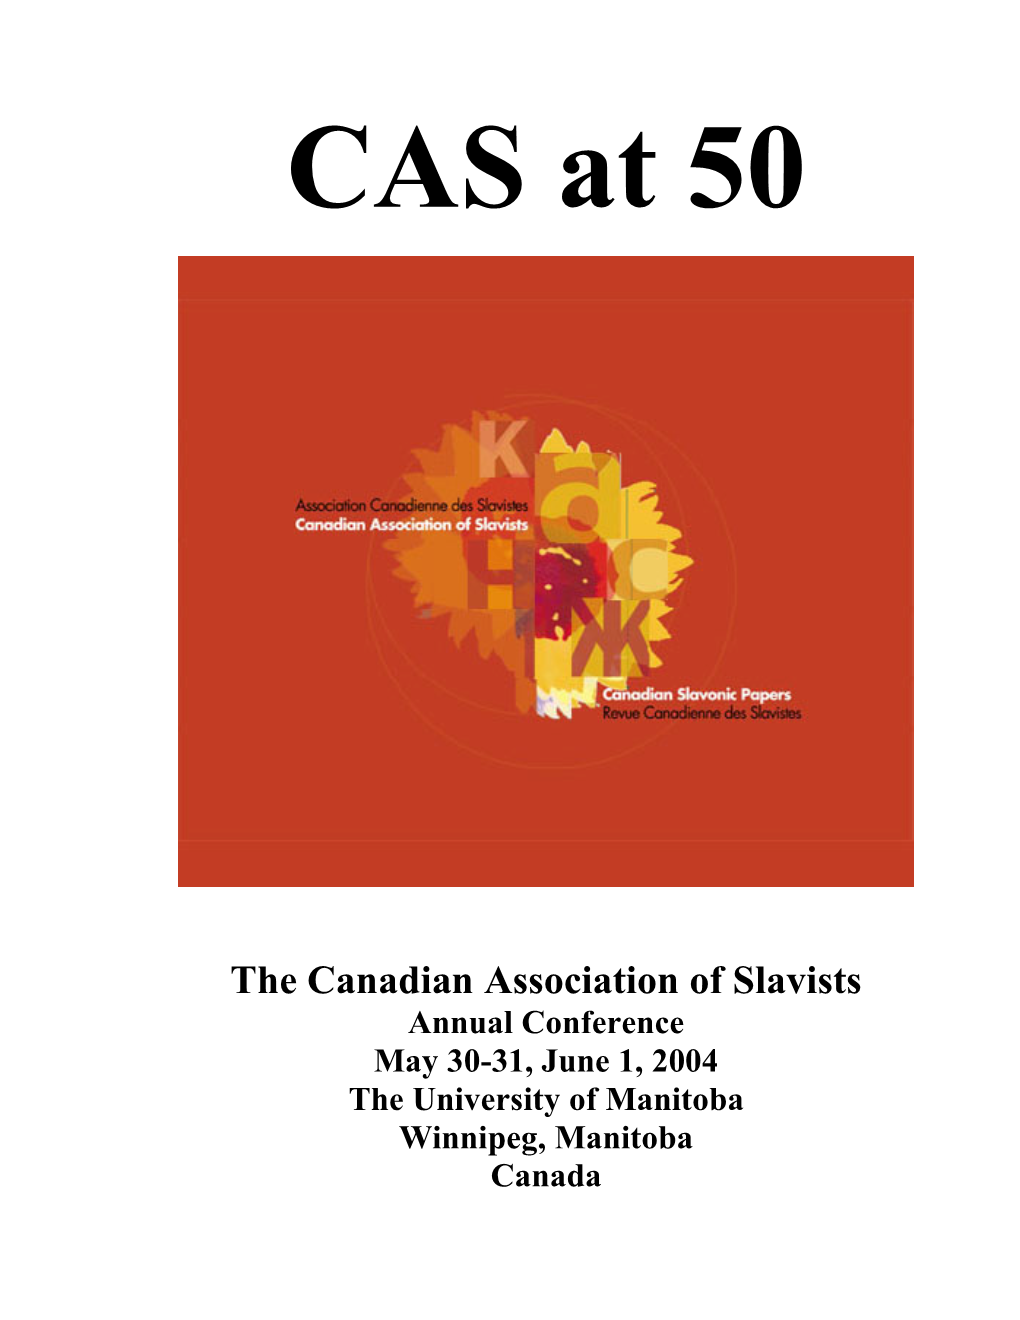 The Canadian Association of Slavists